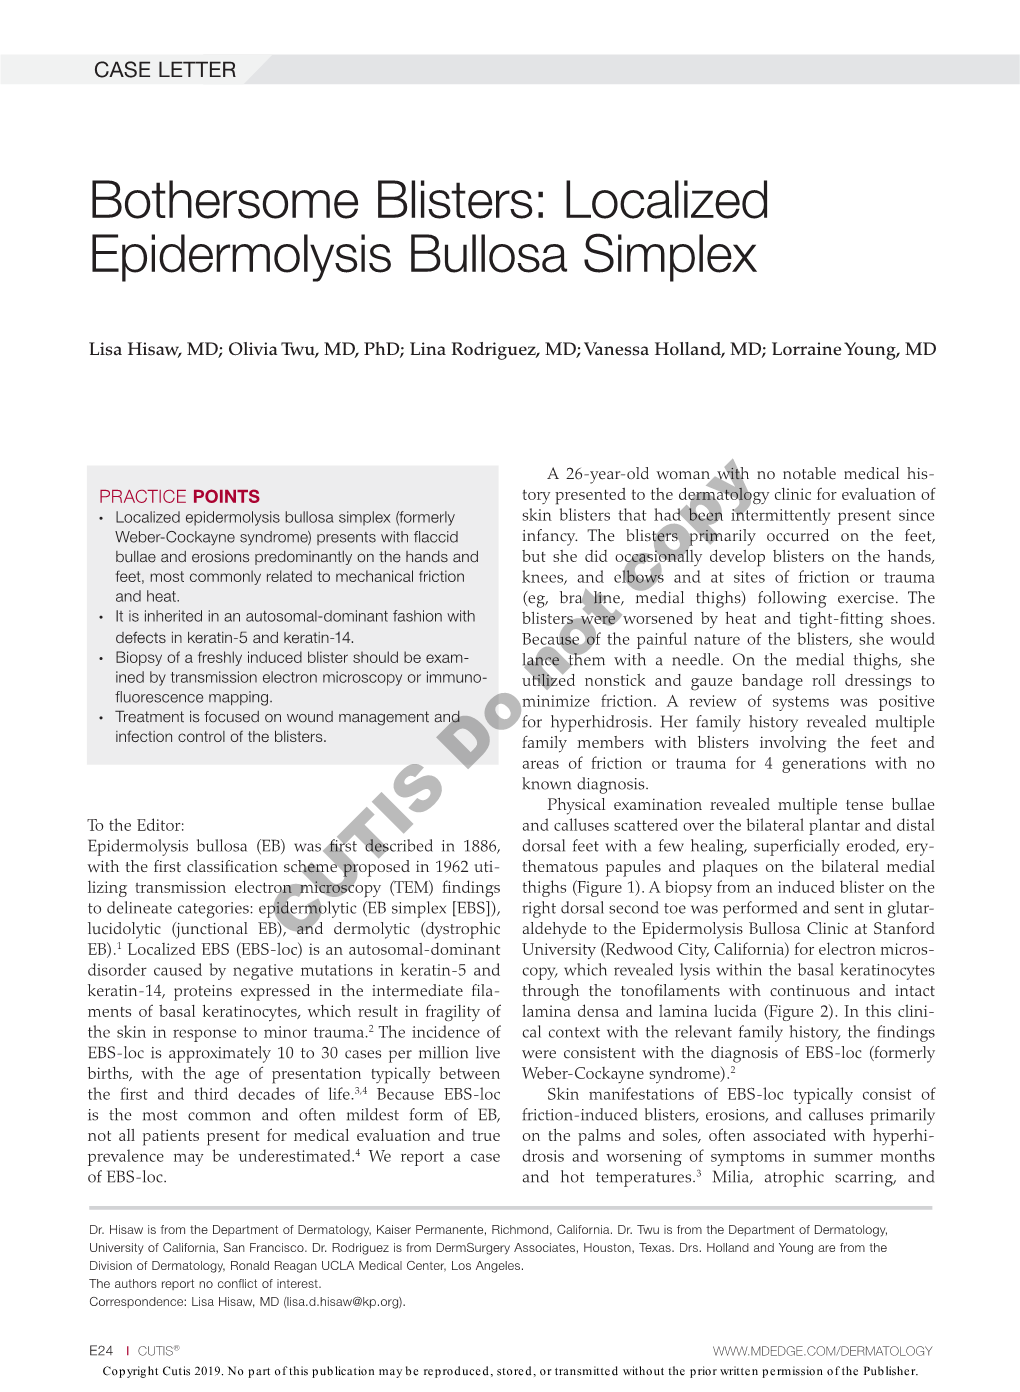 Localized Epidermolysis Bullosa Simplex